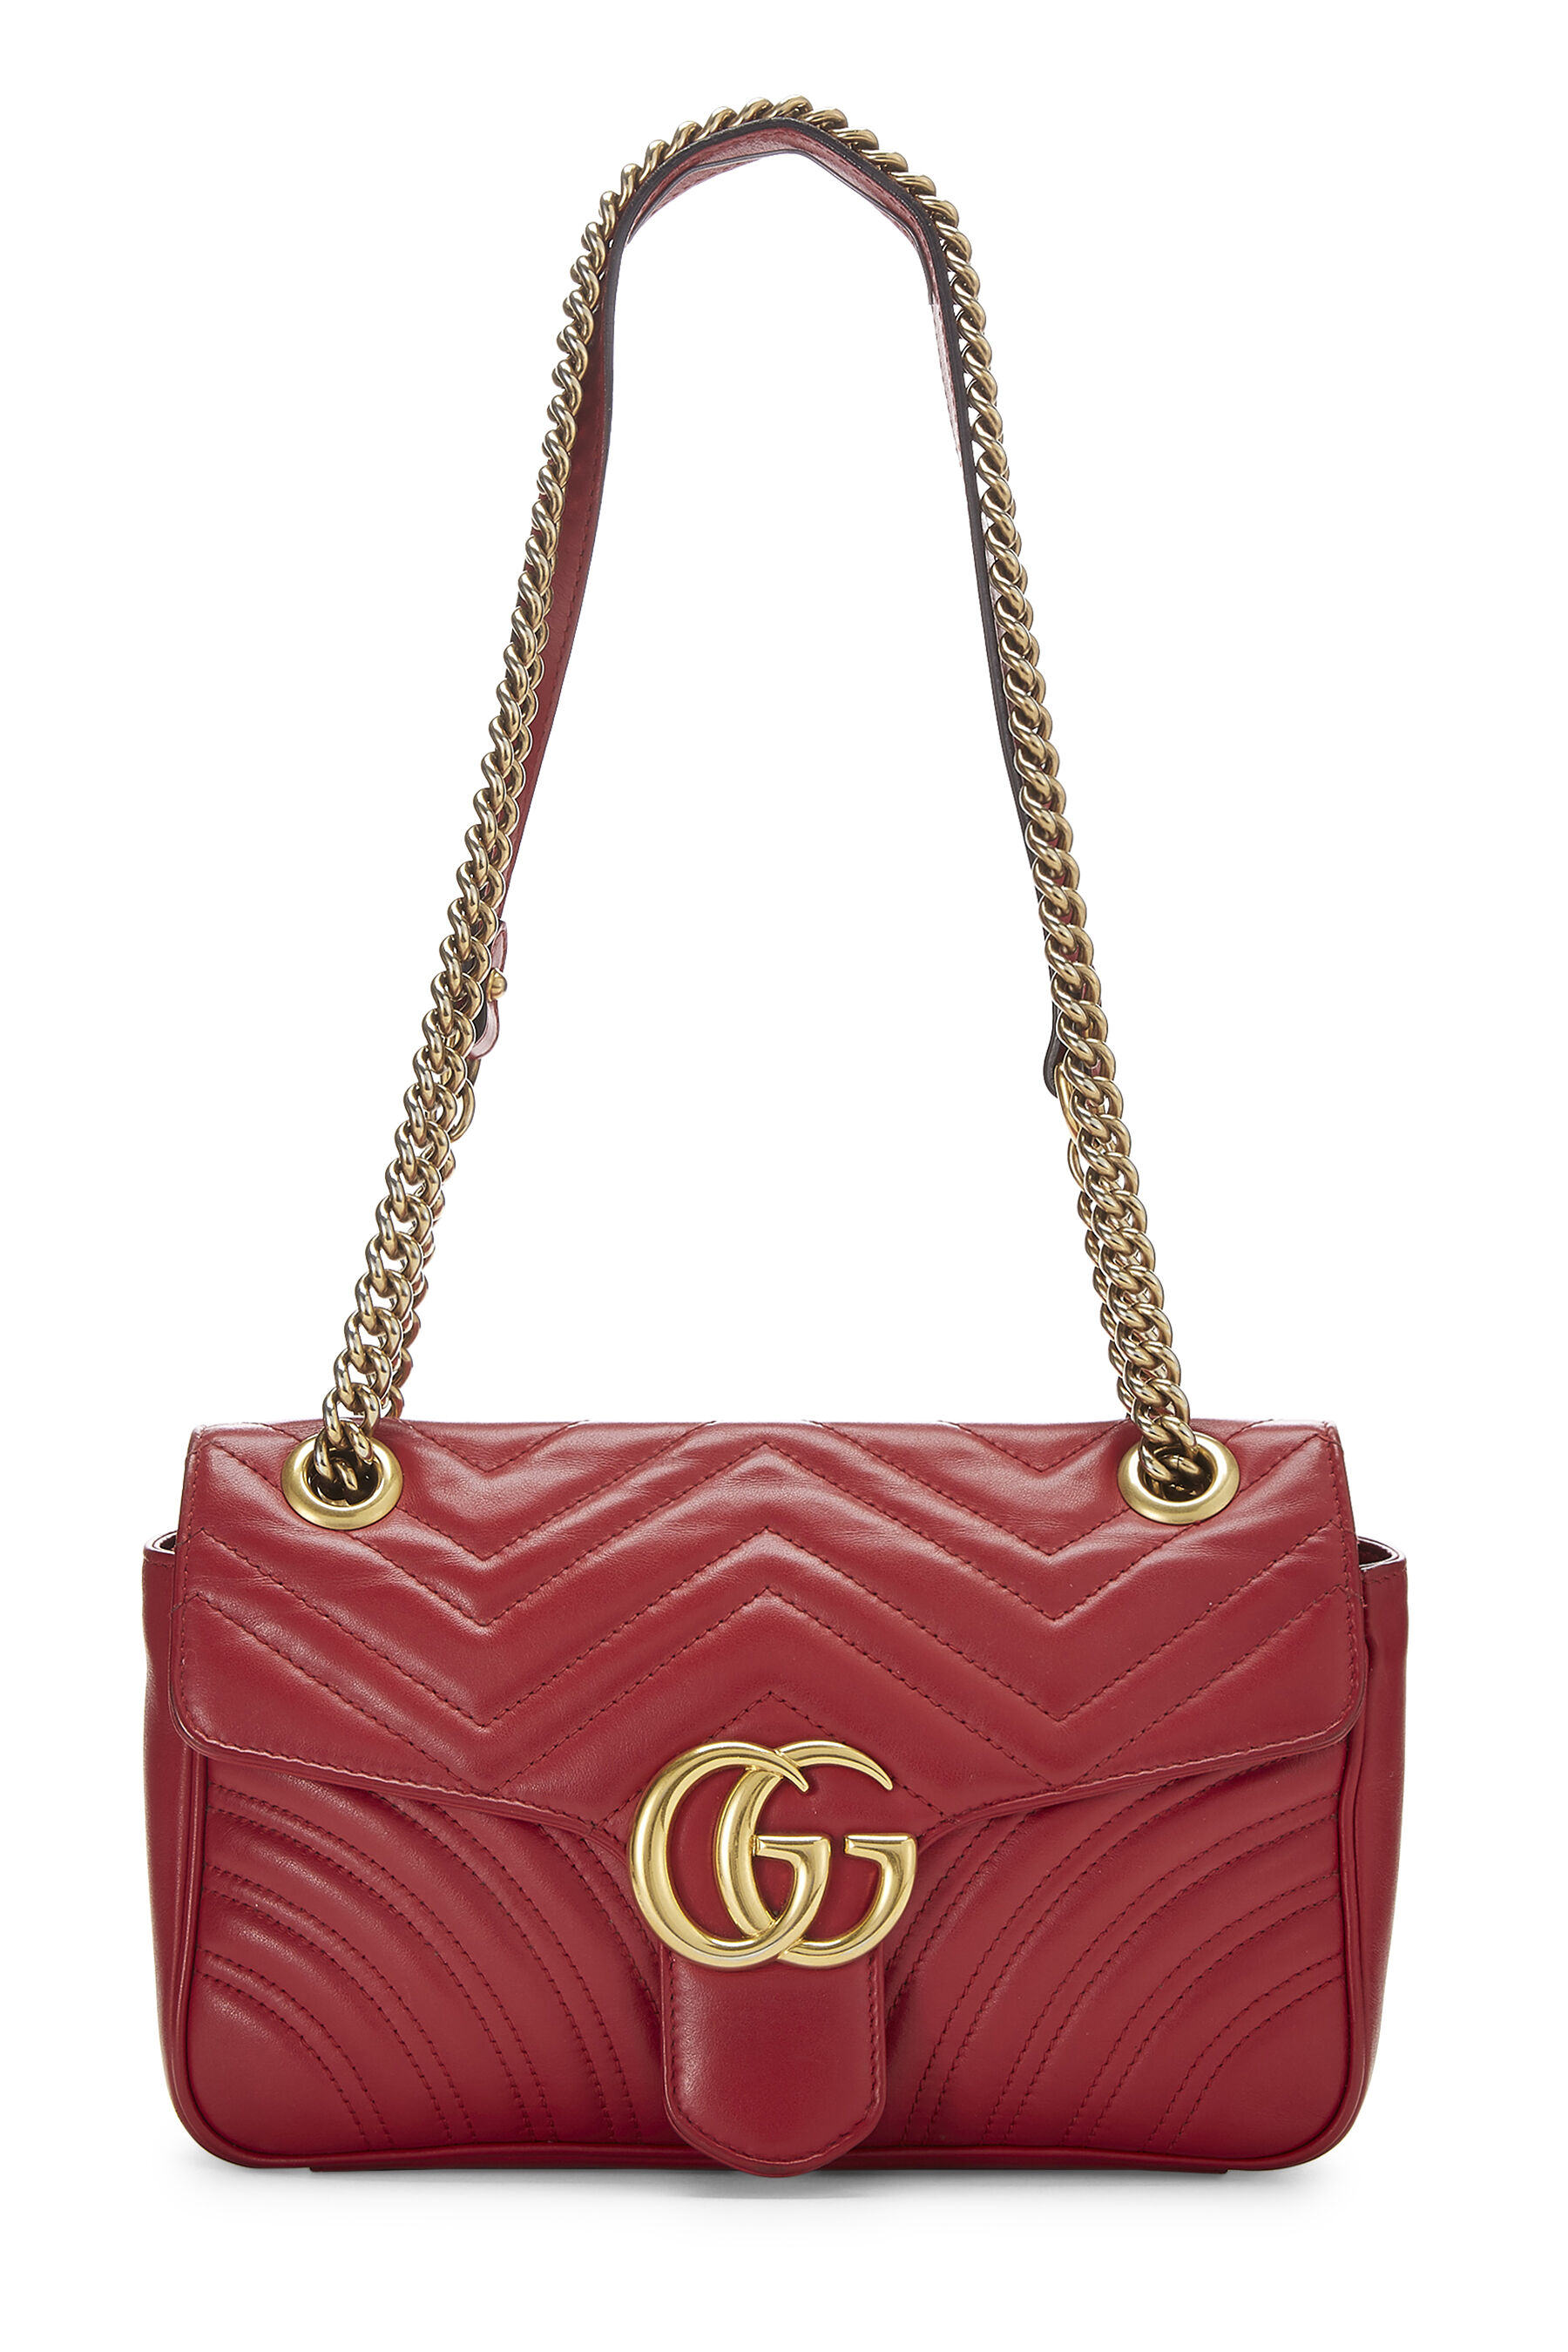 Shop Gucci Red & Blue Buckle Print Leather GG Marmont Shoulder Bag 